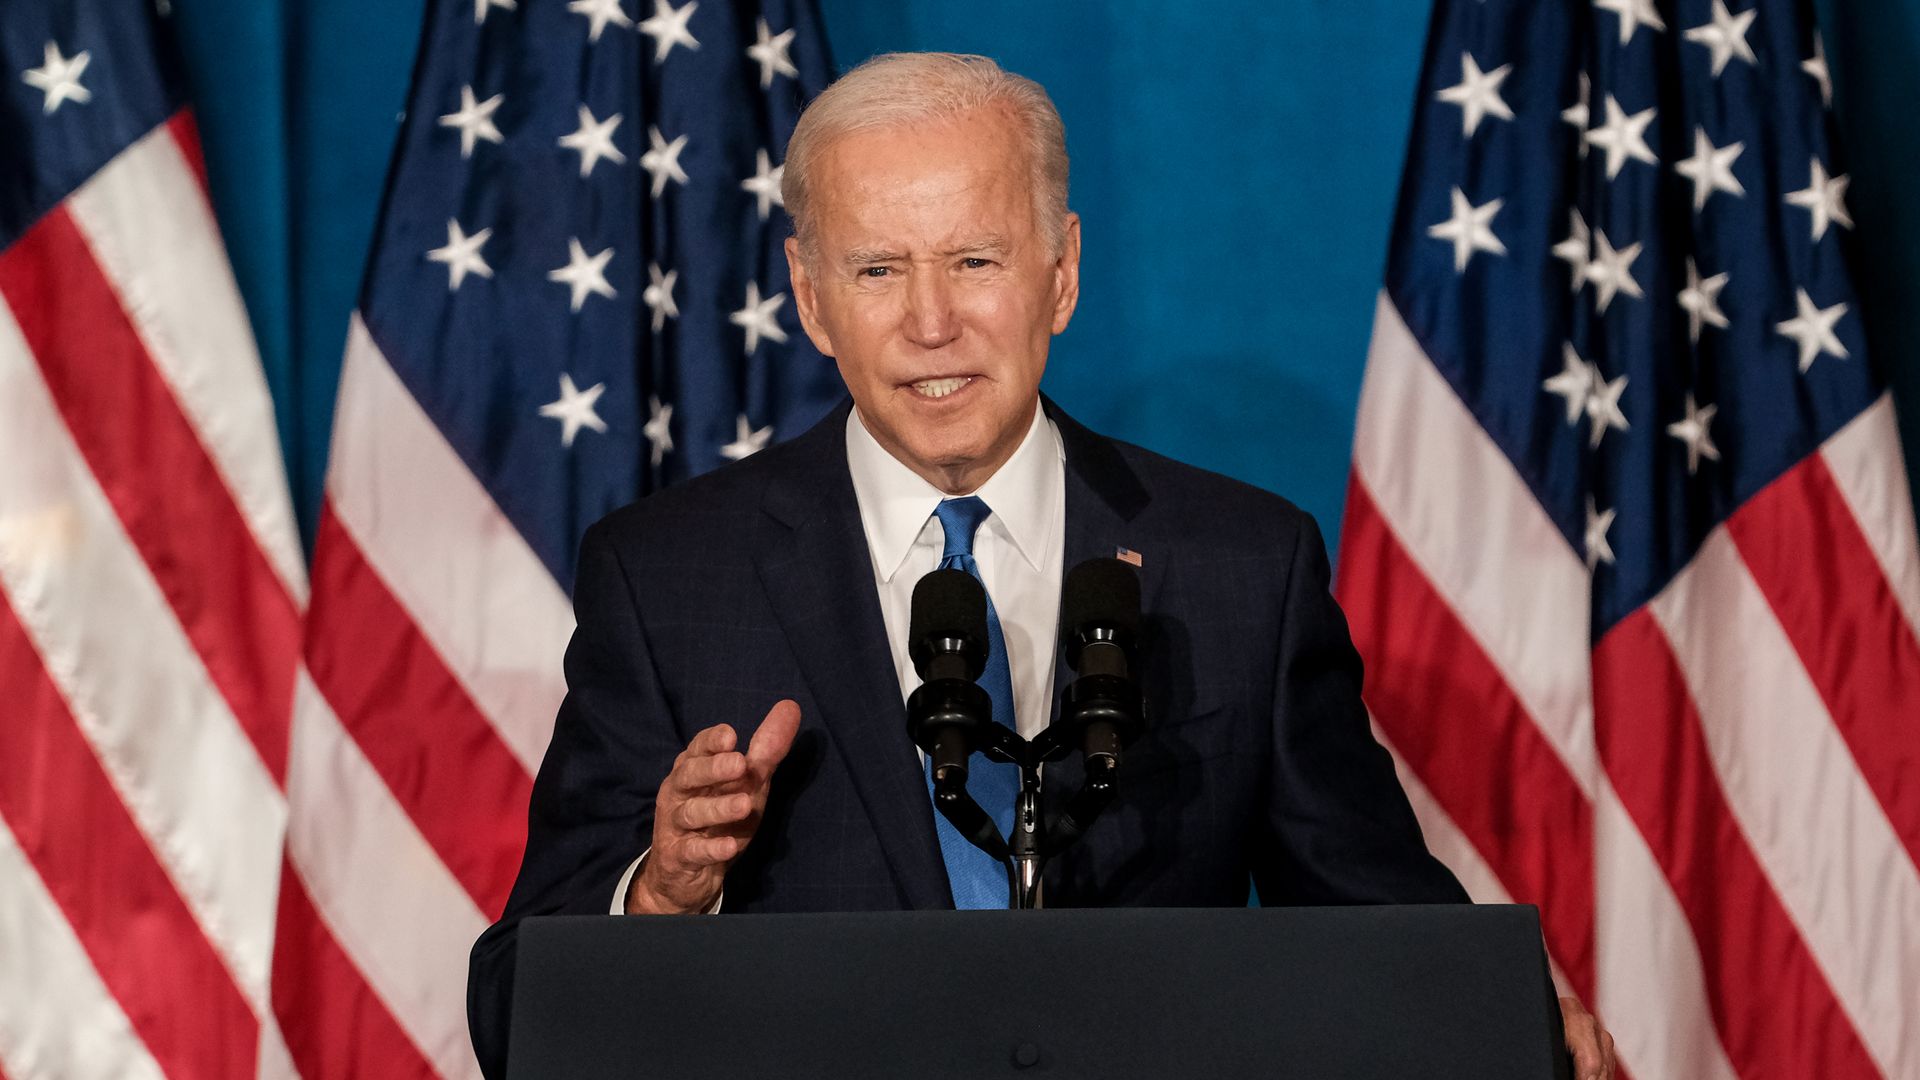 President Biden delivers remarks at an event on November 2, 2022 in Washington, DC. 